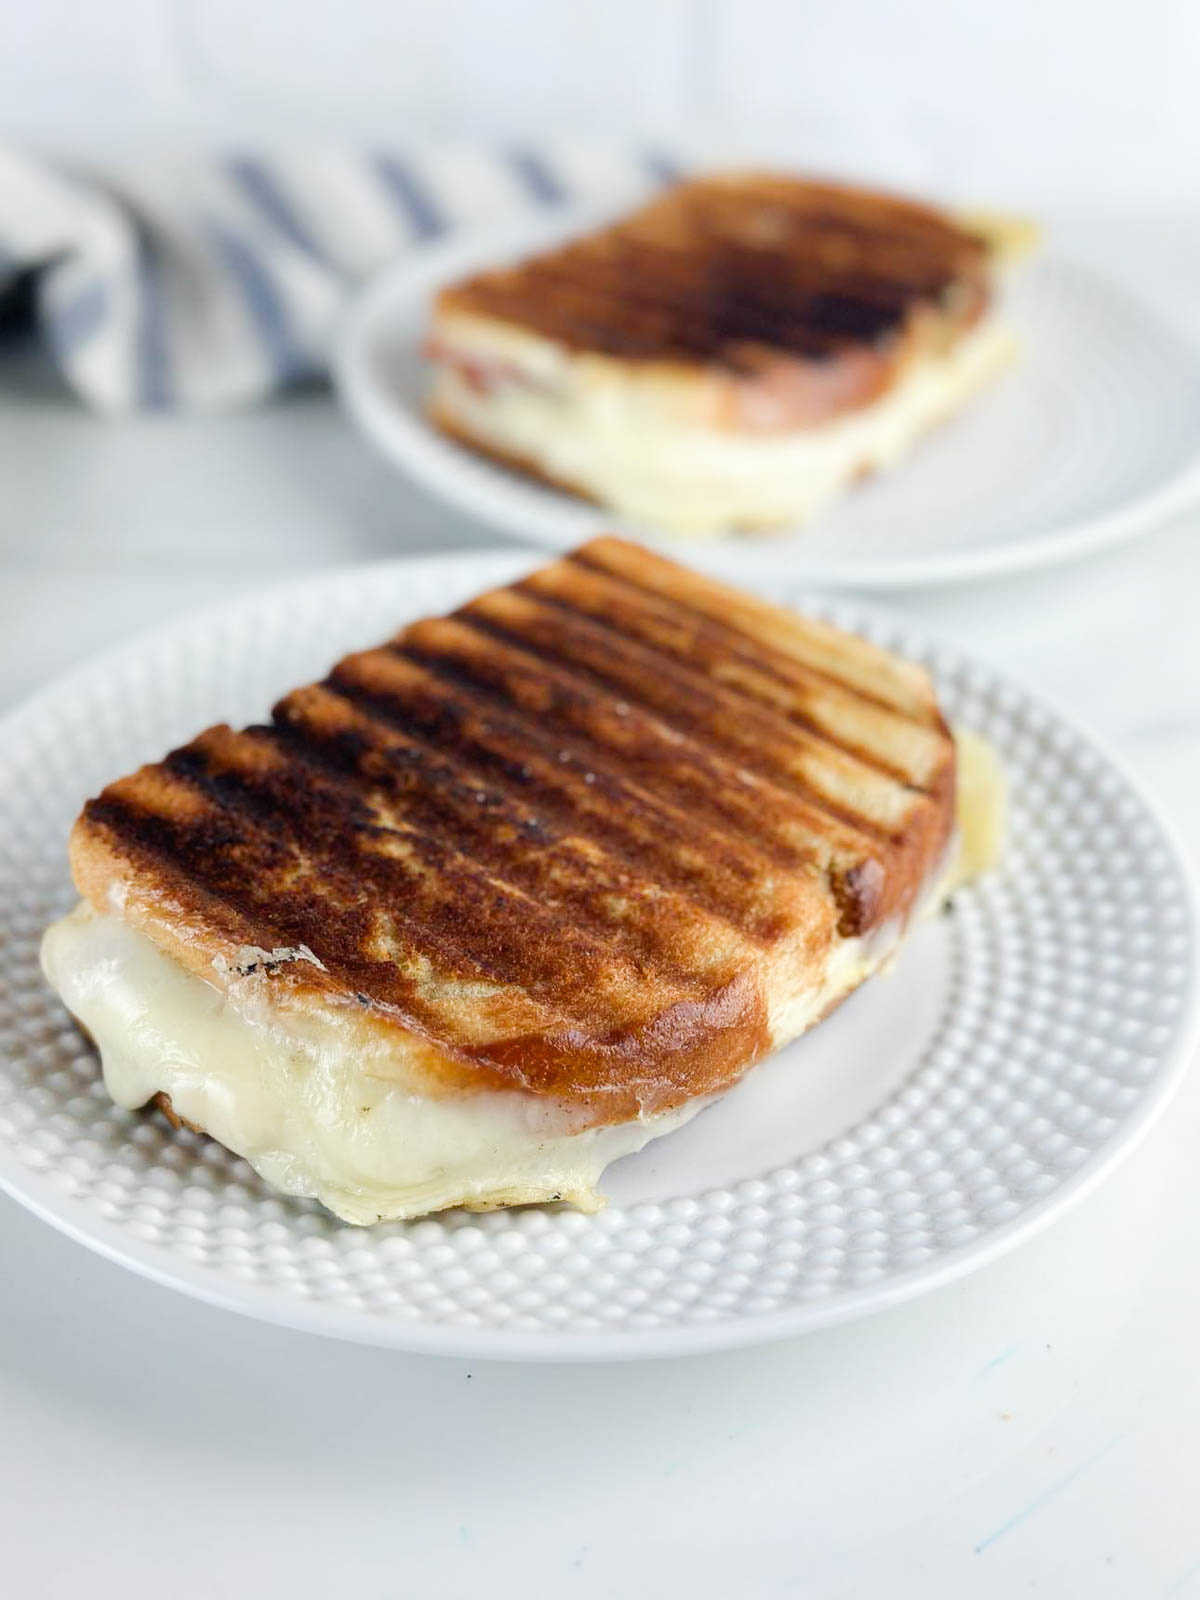 2 ham and cheese paninis on white plates